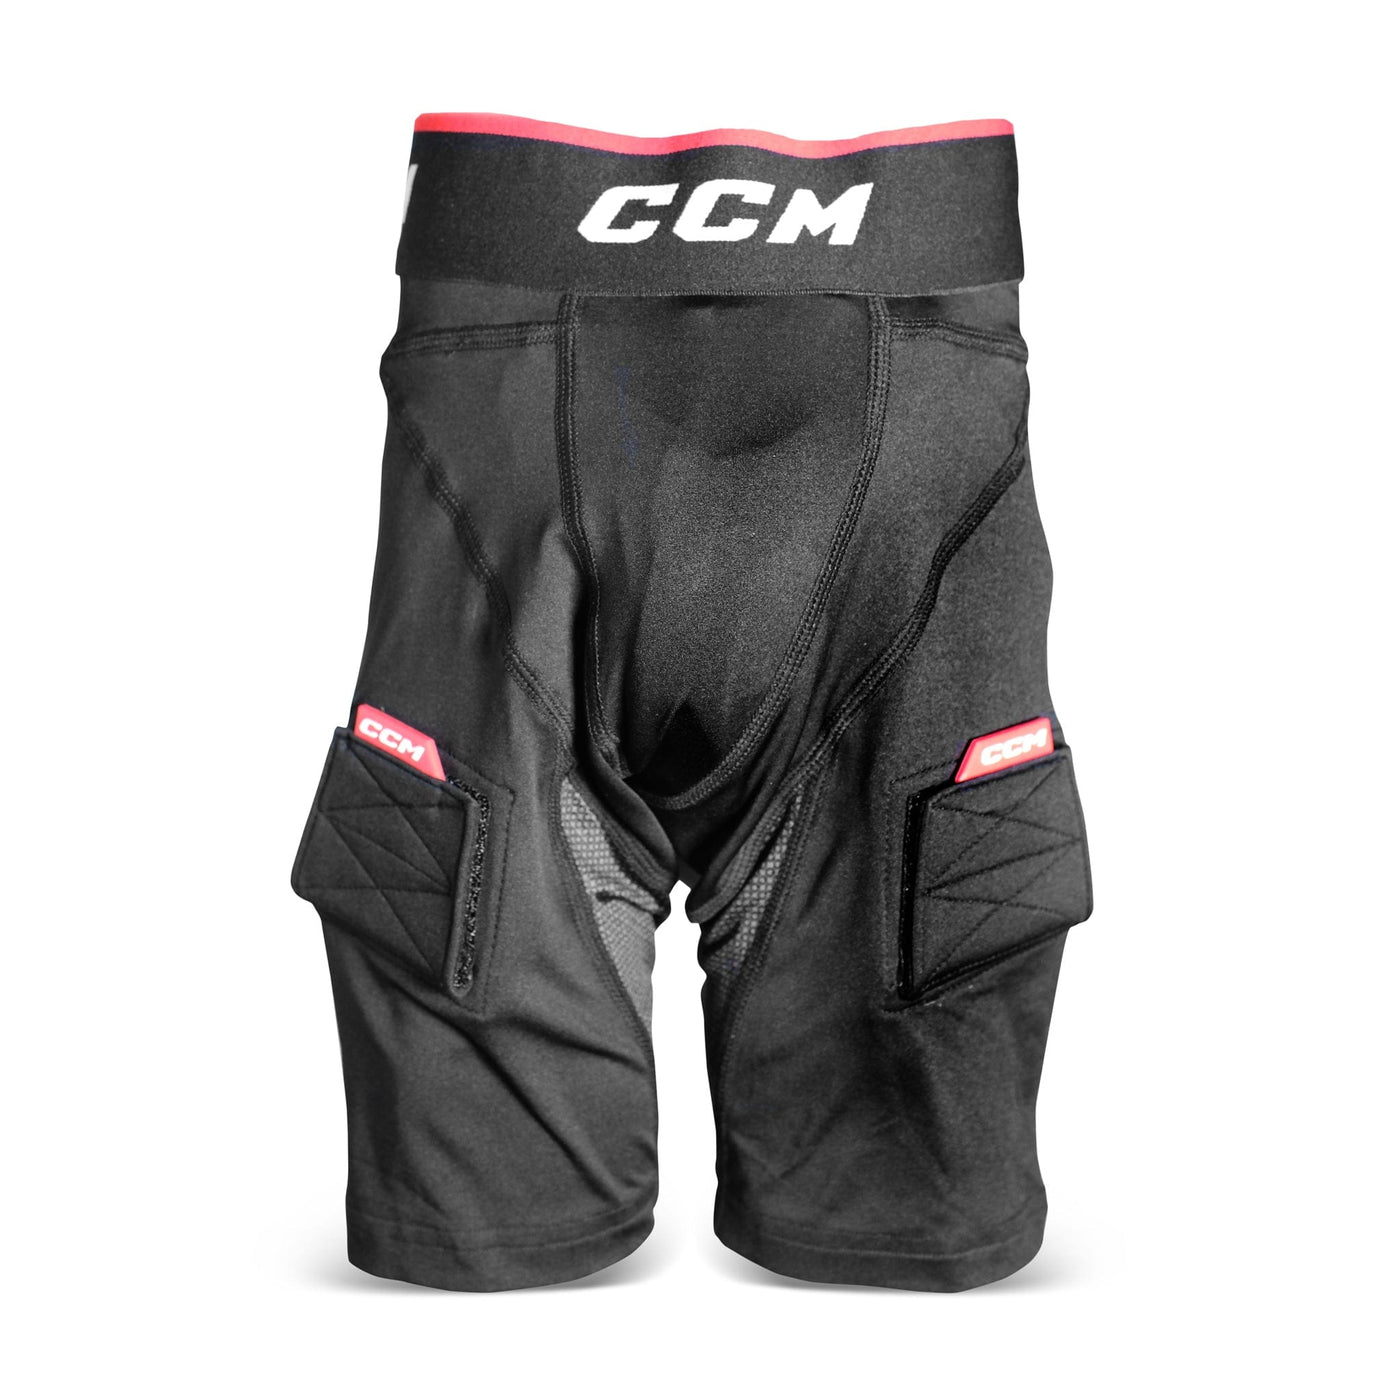 CCM Senior Compression Jock Shorts w/ Tabs - The Hockey Shop Source For Sports